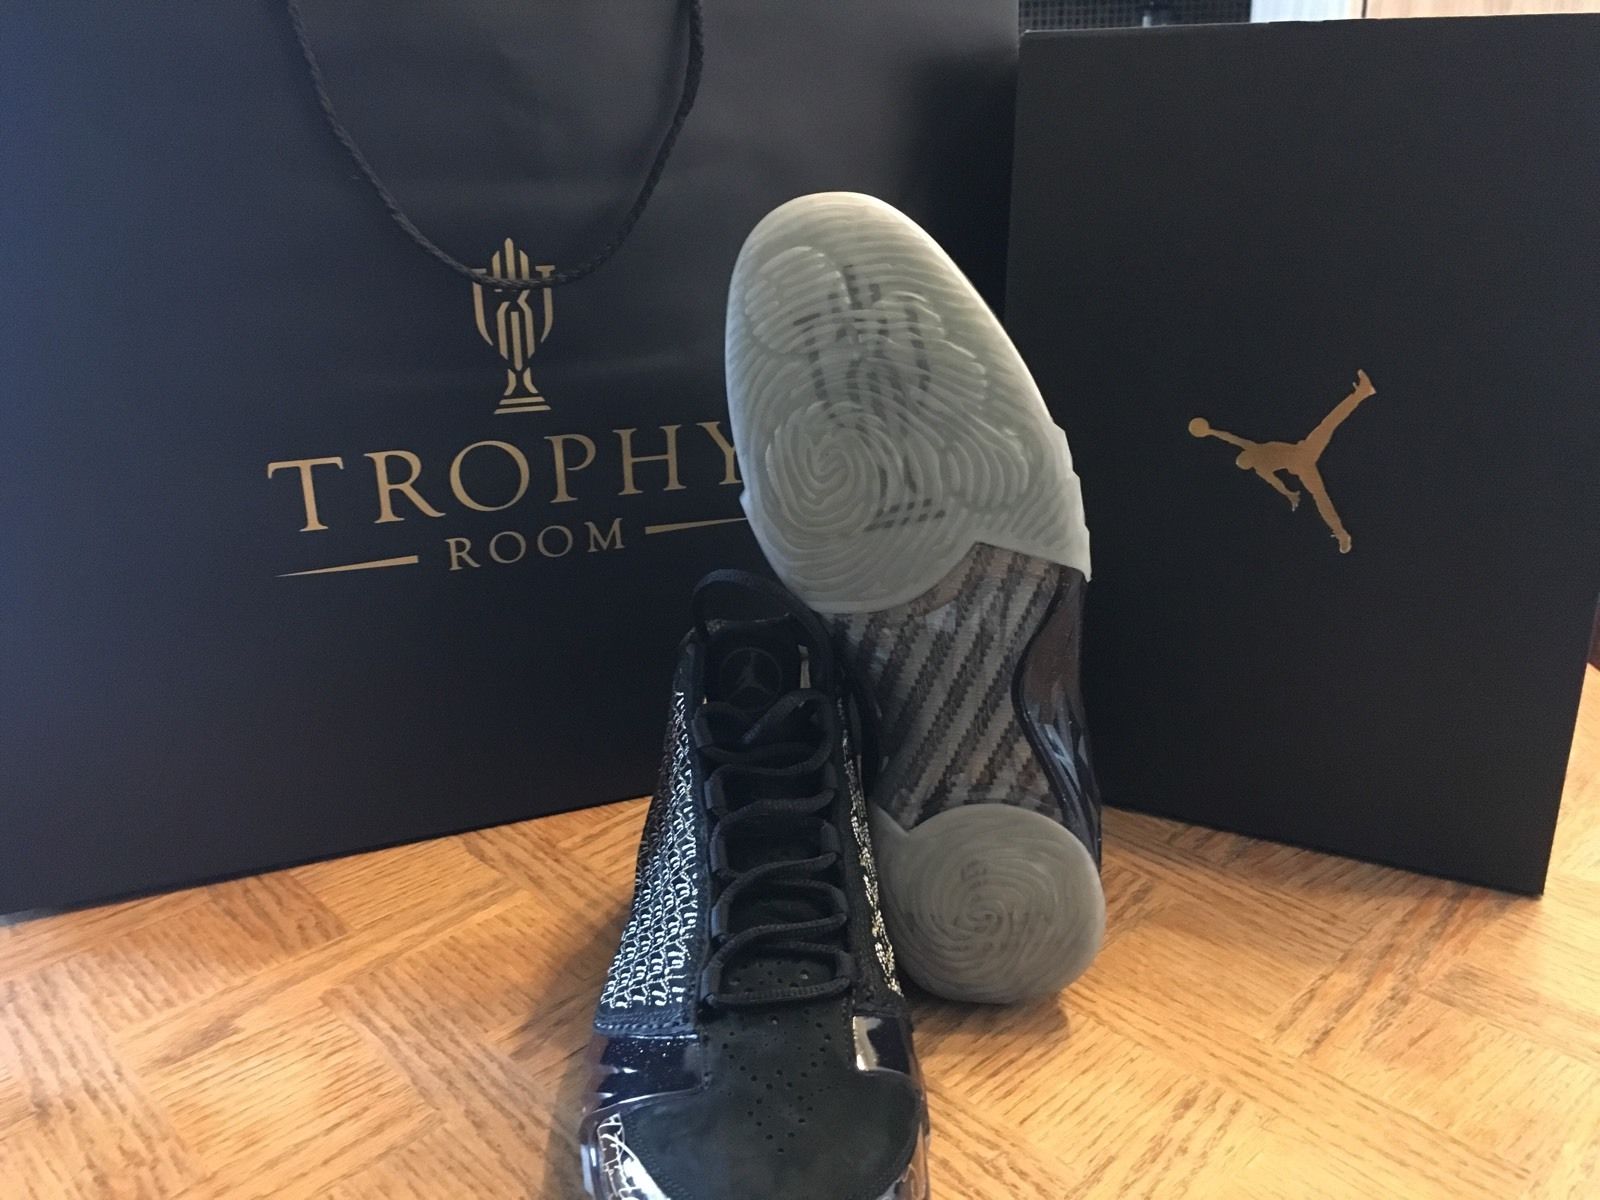 Trophy Room Air Jordan XX3 Release Date